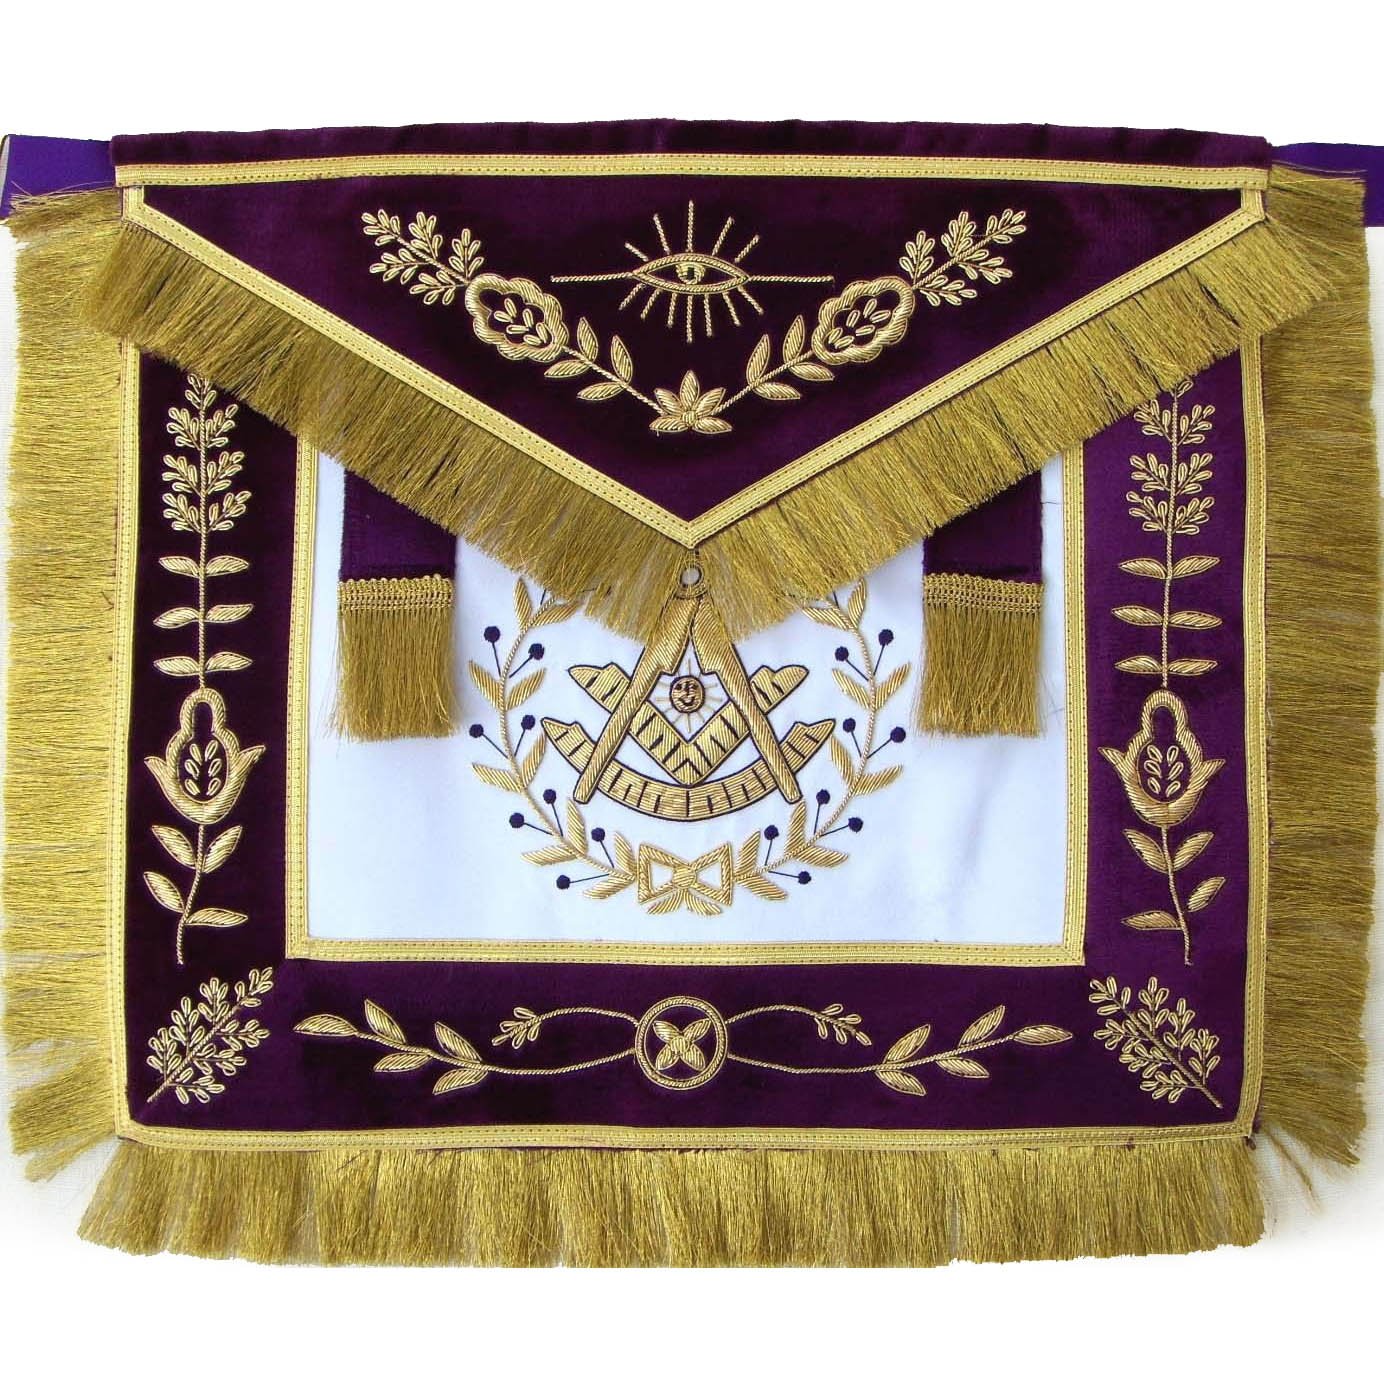 Past Master Blue Lodge Apron - White Satin & Purple with Gold Fringe Tassels - Bricks Masons